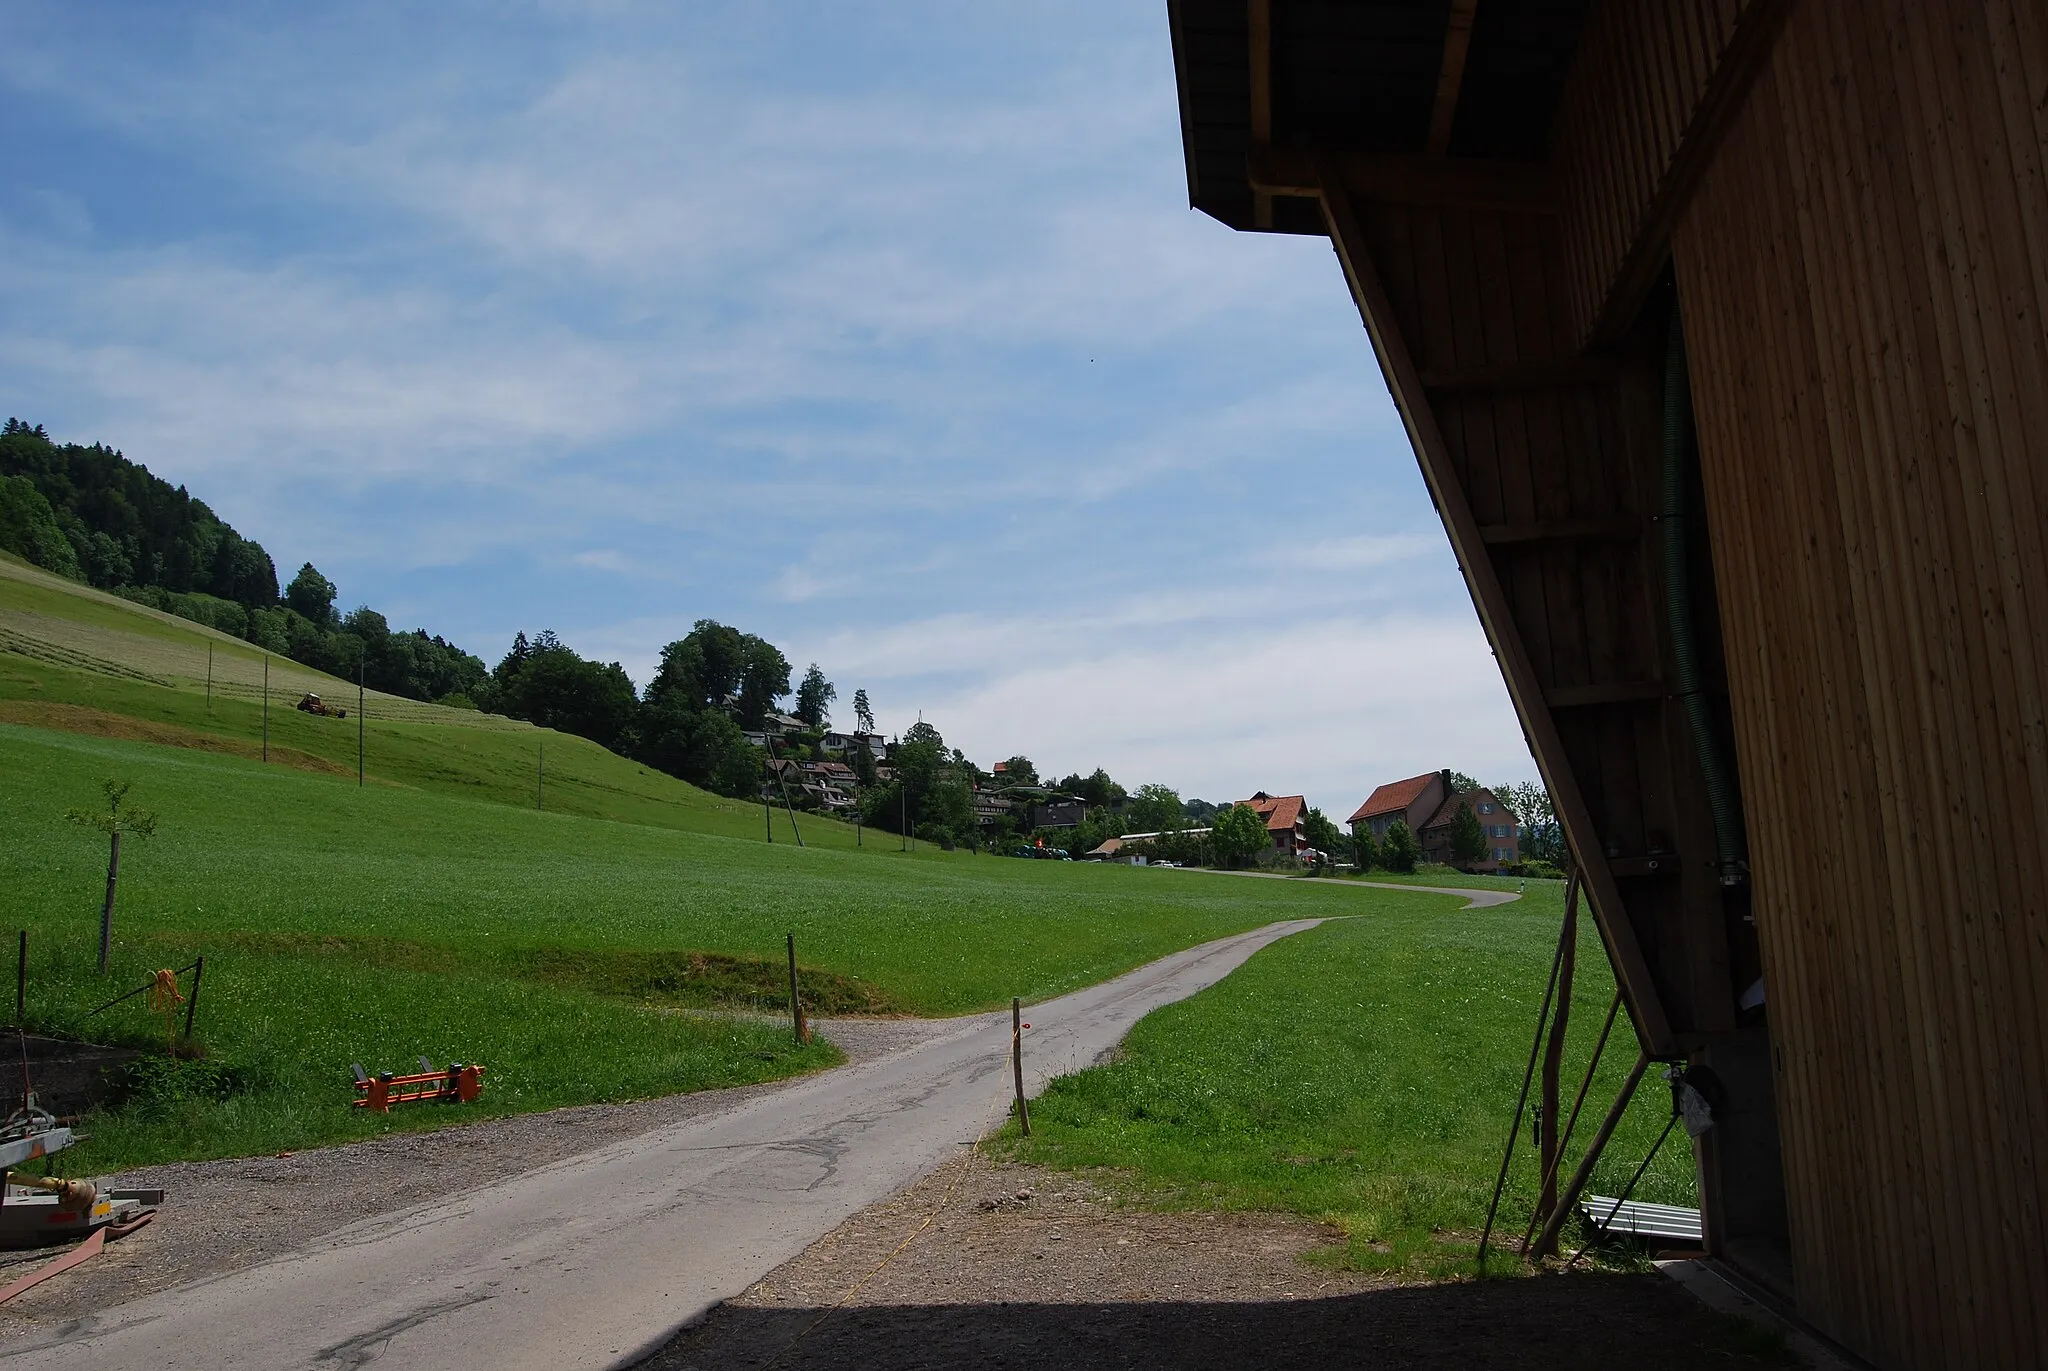 Photo showing: Haspel, municipality of St. Gallenkappel, canton of St. Gallen, Switzerland